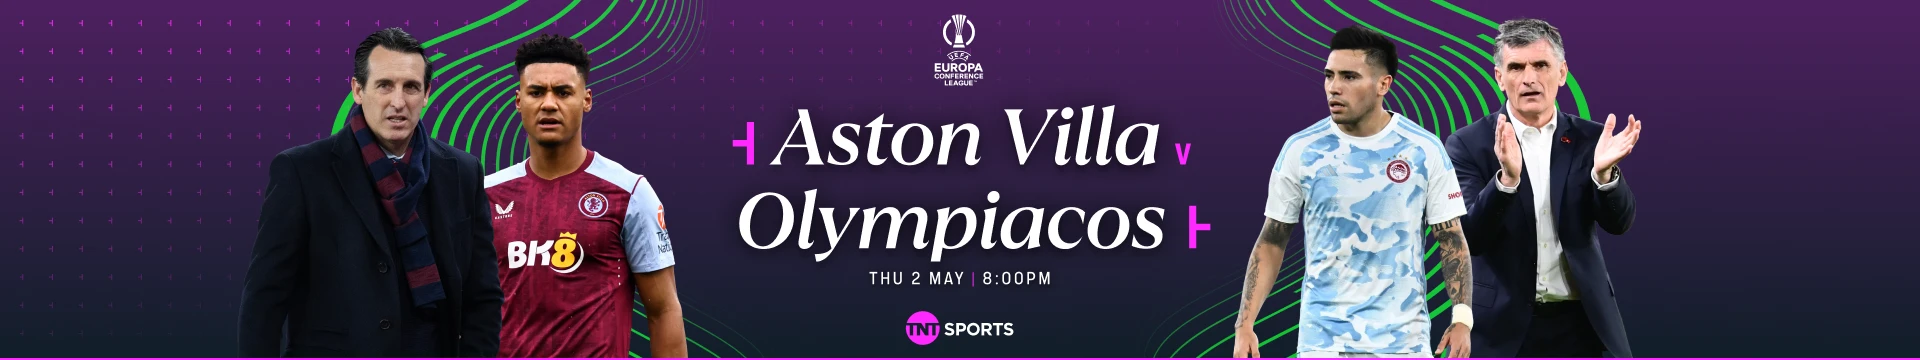 Aston Villa v Olympiakos Thursday 2 May at 8pm